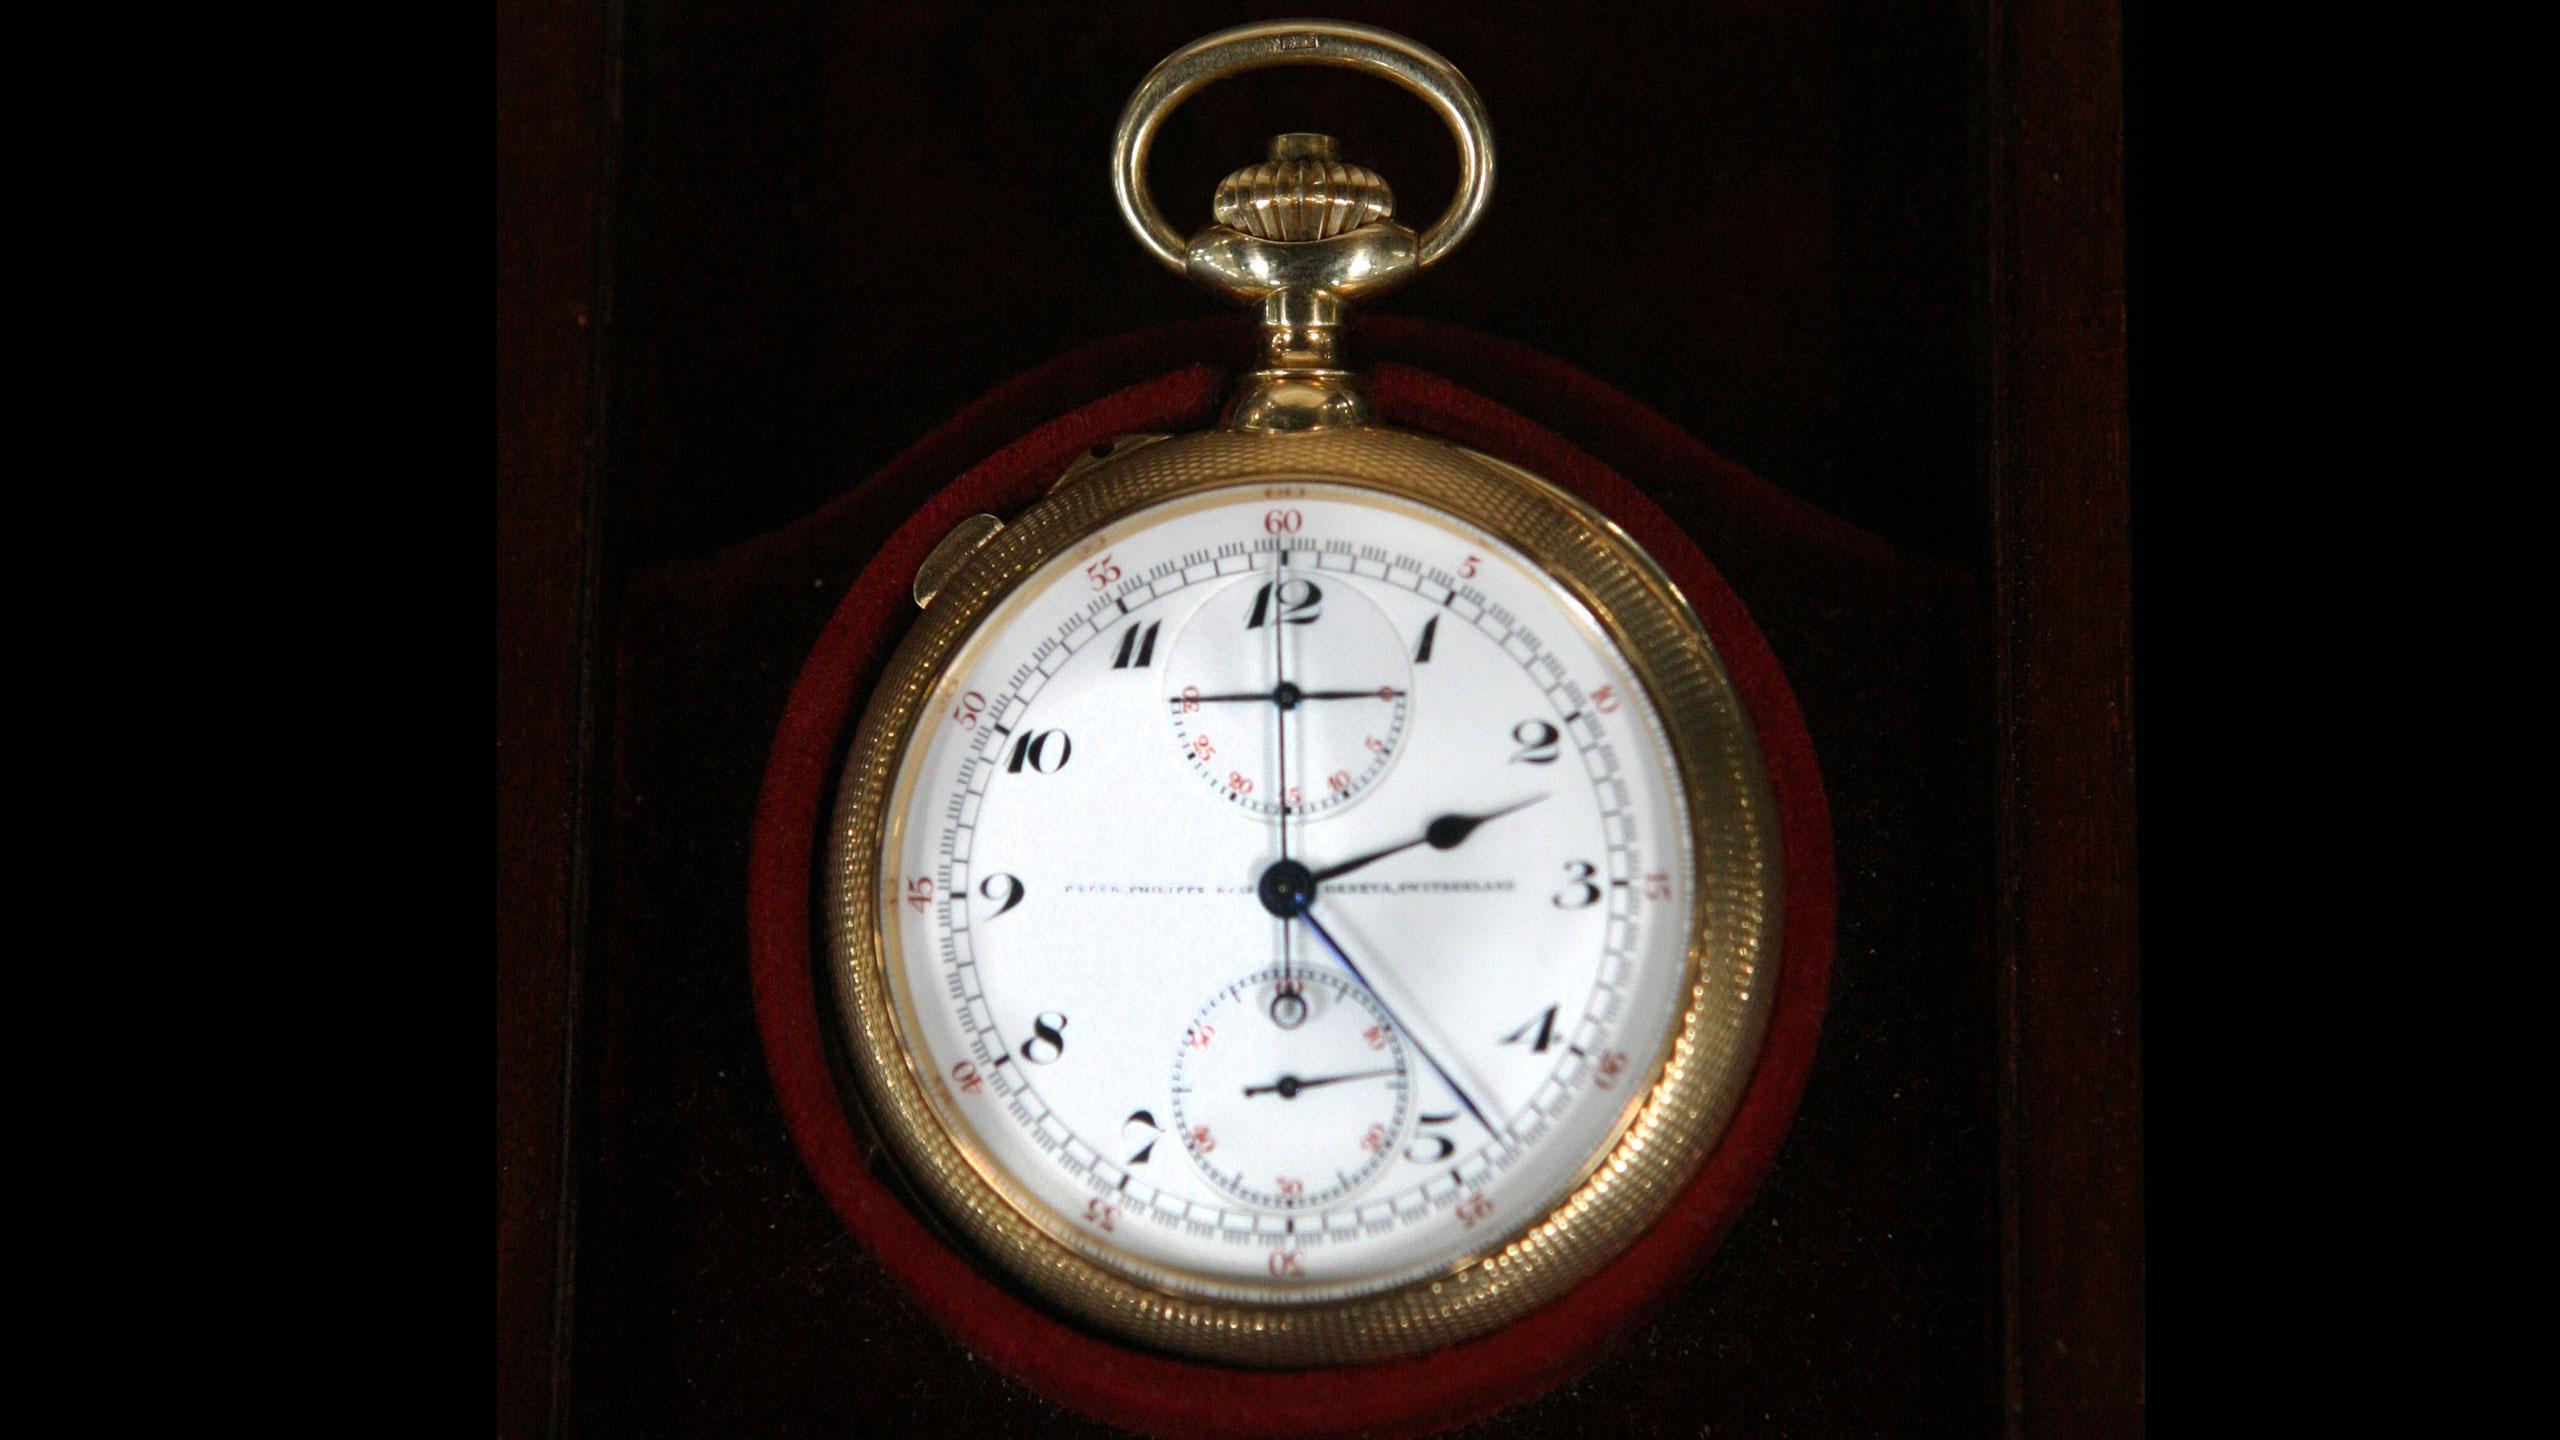 Patek Philippe Louis XV Pocket watch